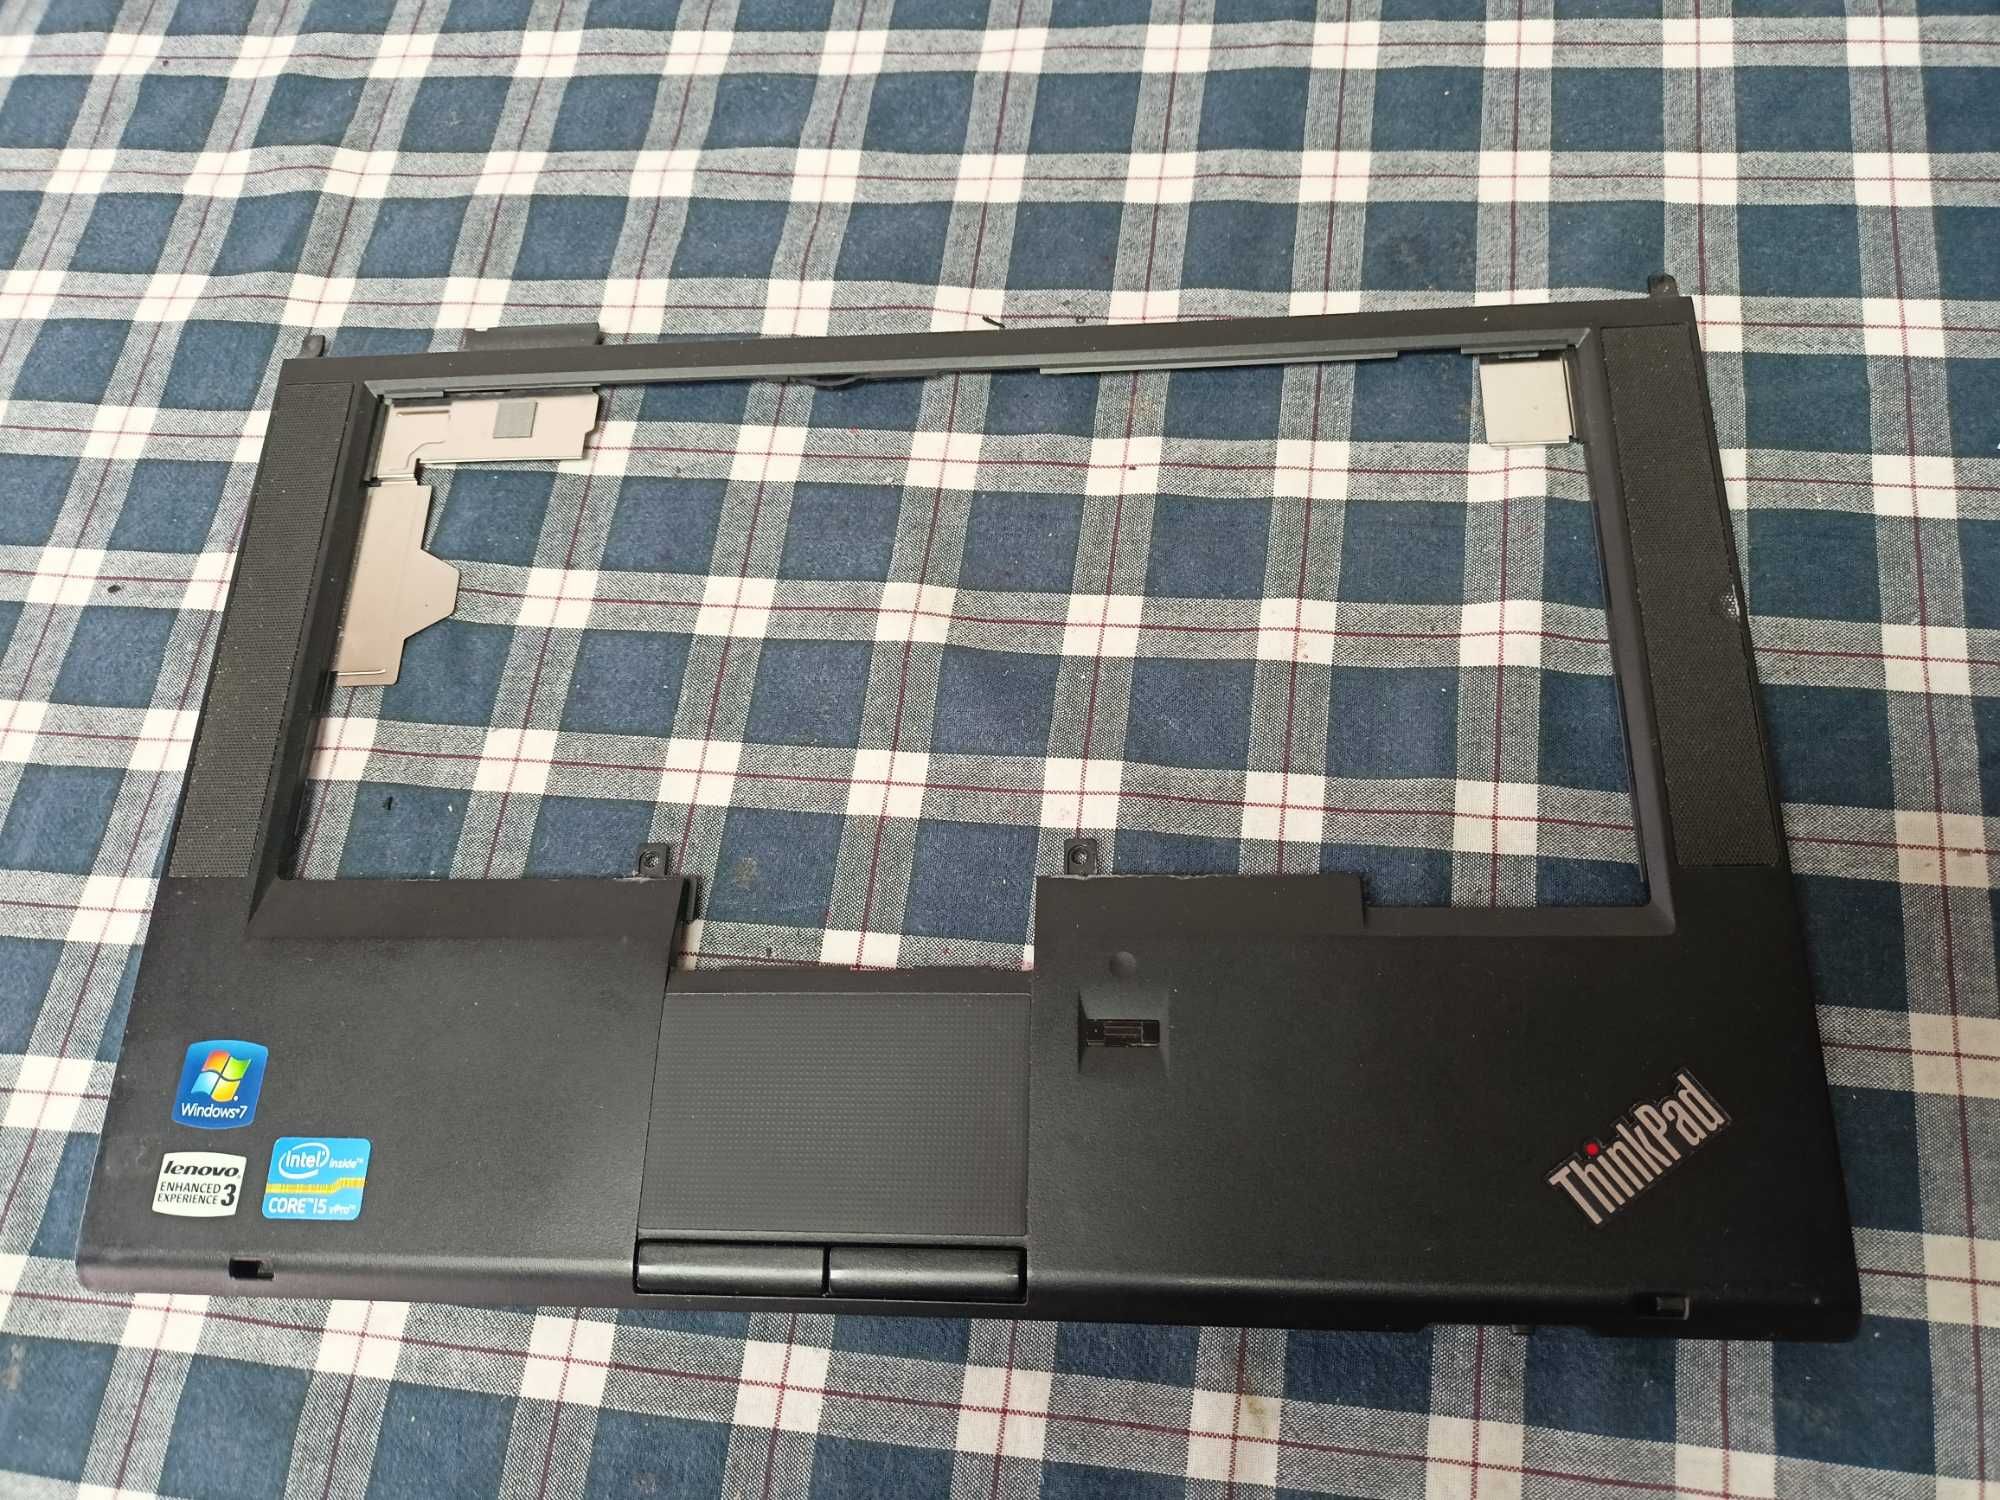 Dezmembrez Lenovo ThinkPad T430 - PretMic